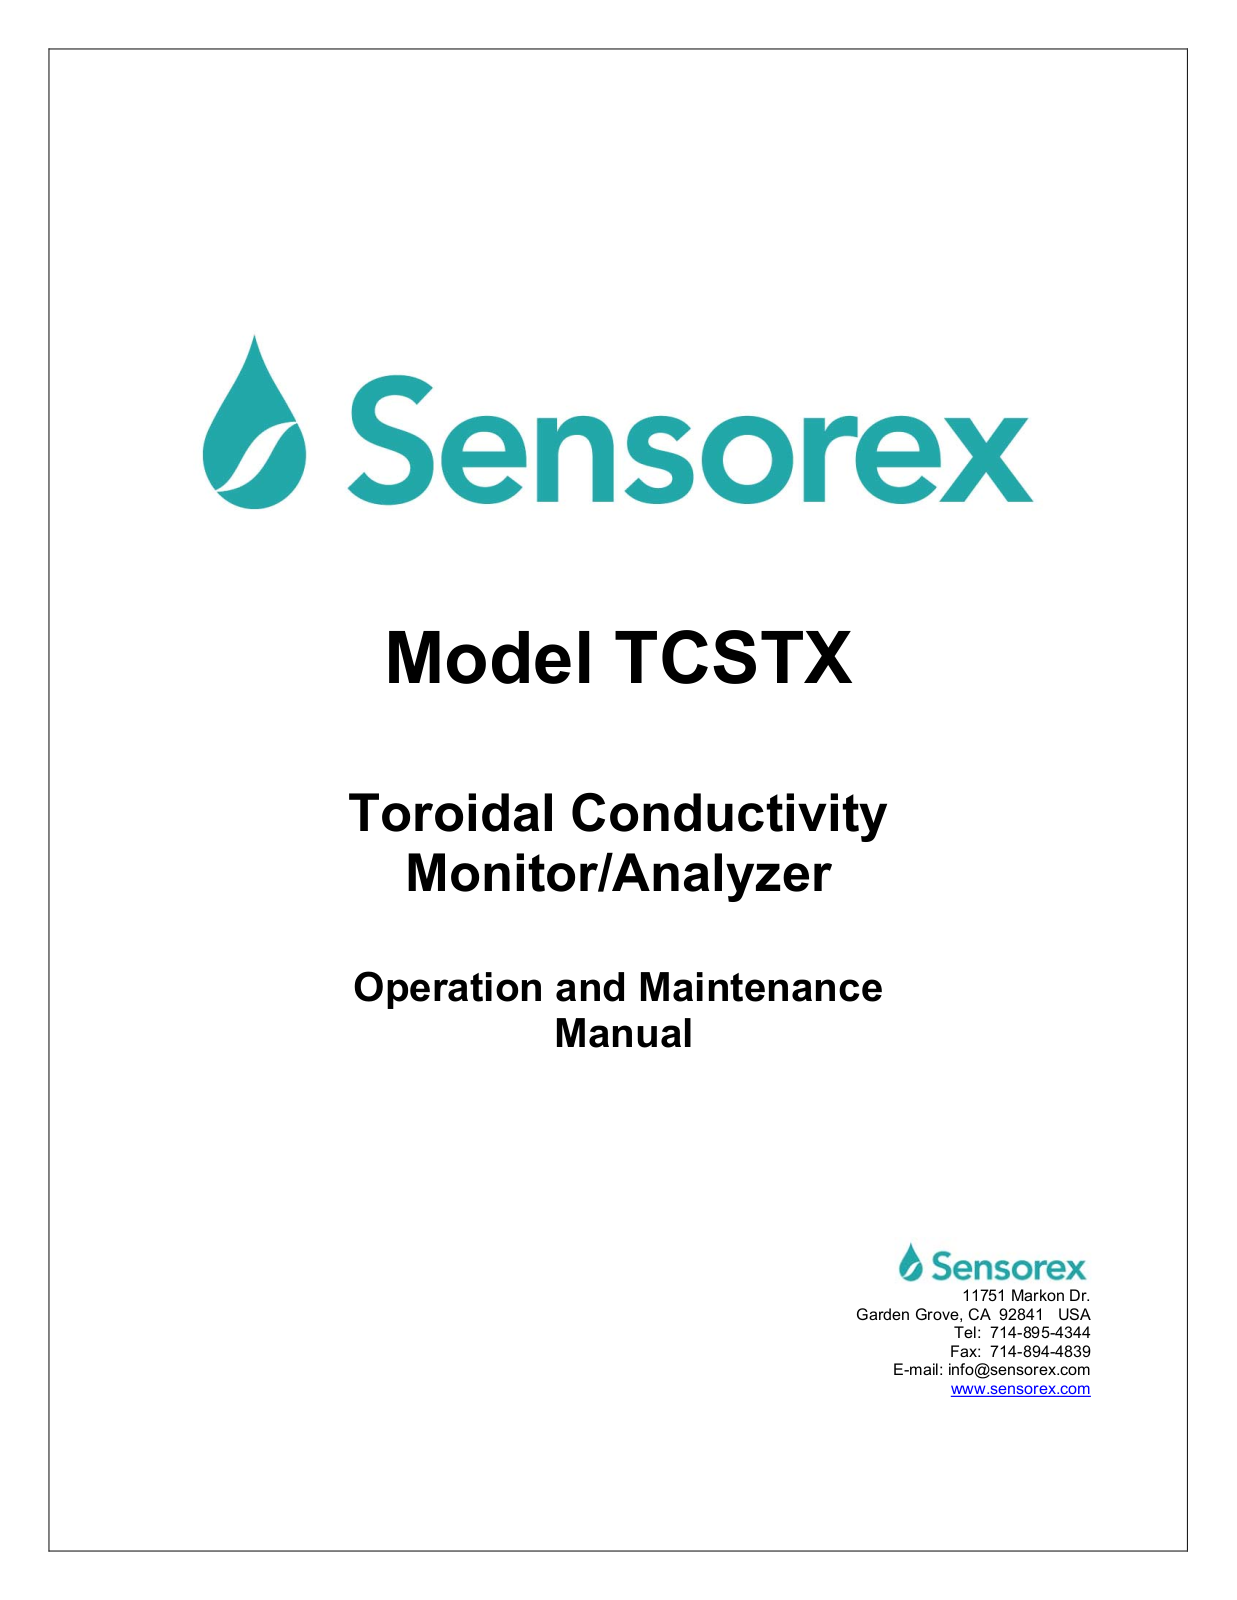 Sensorex TCSTX Instruction Manual